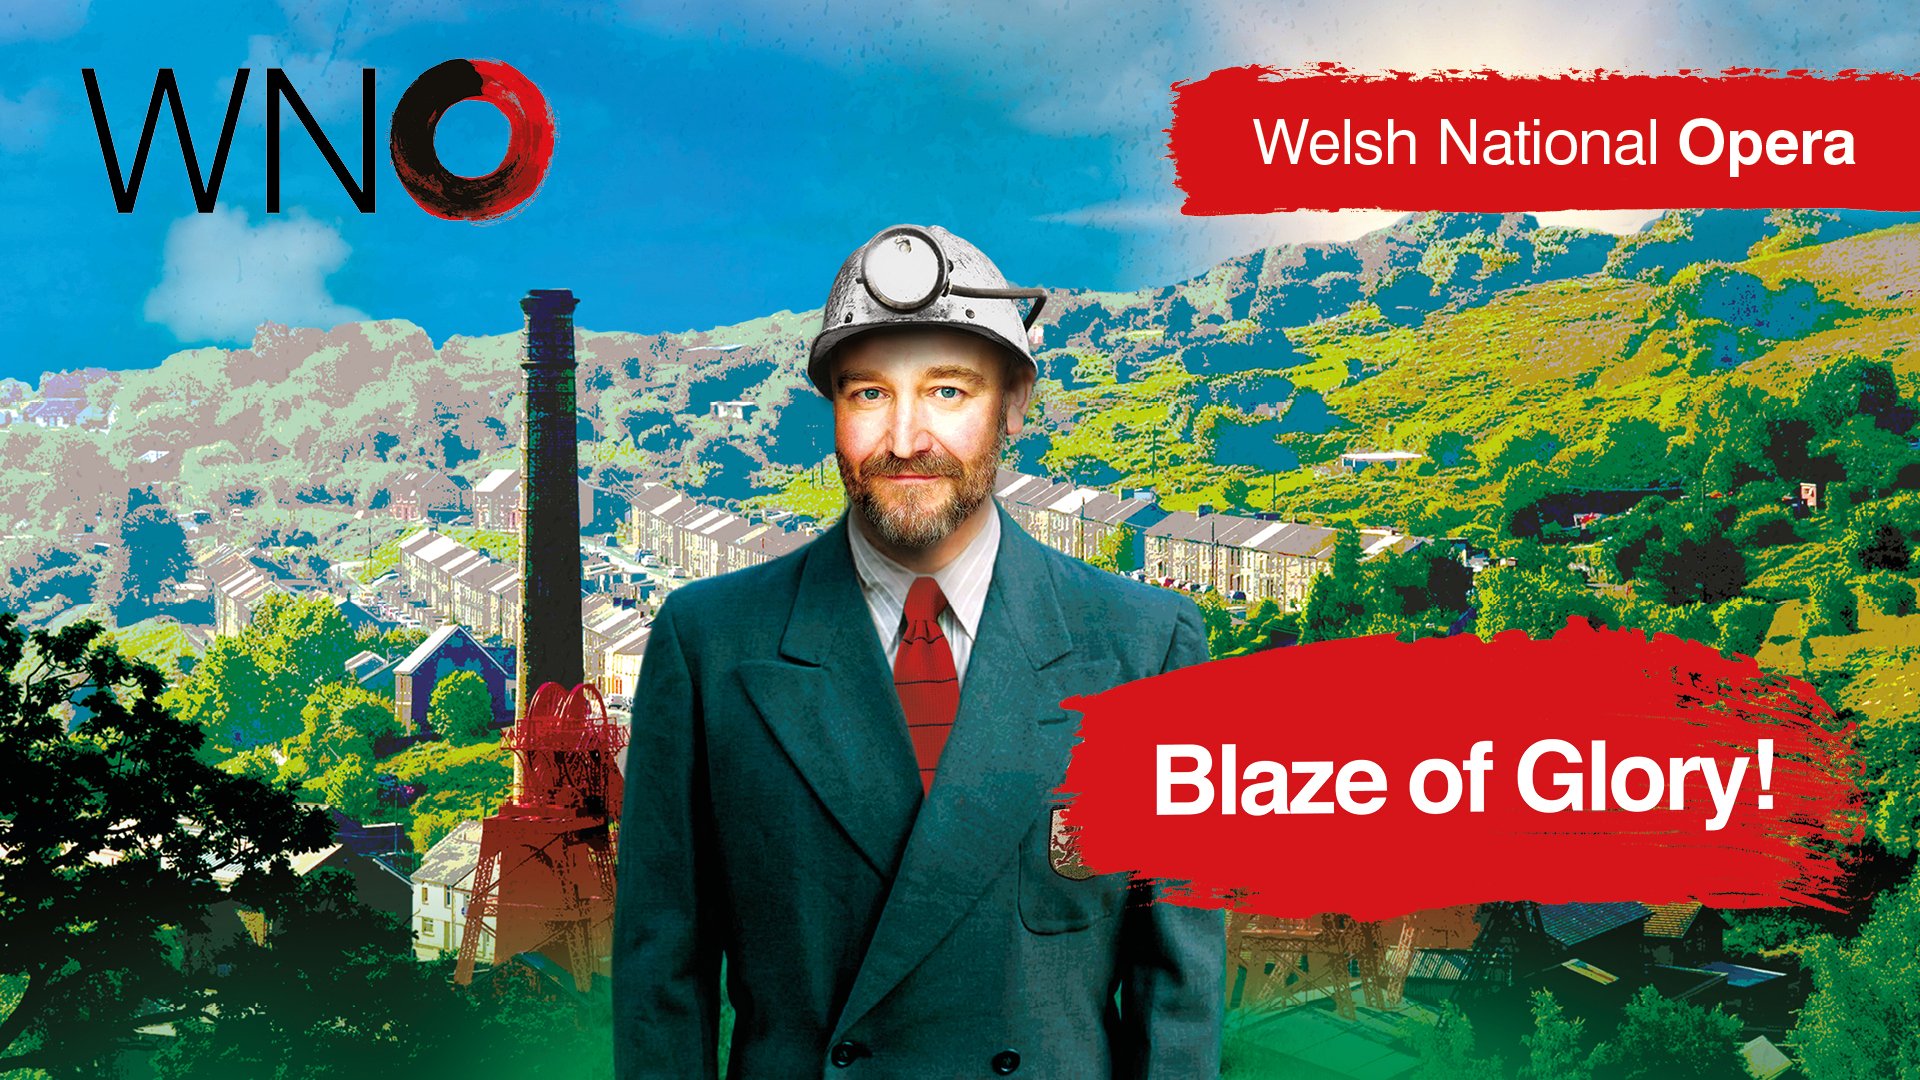 Welsh National Opera – Blaze of Glory! Top Image